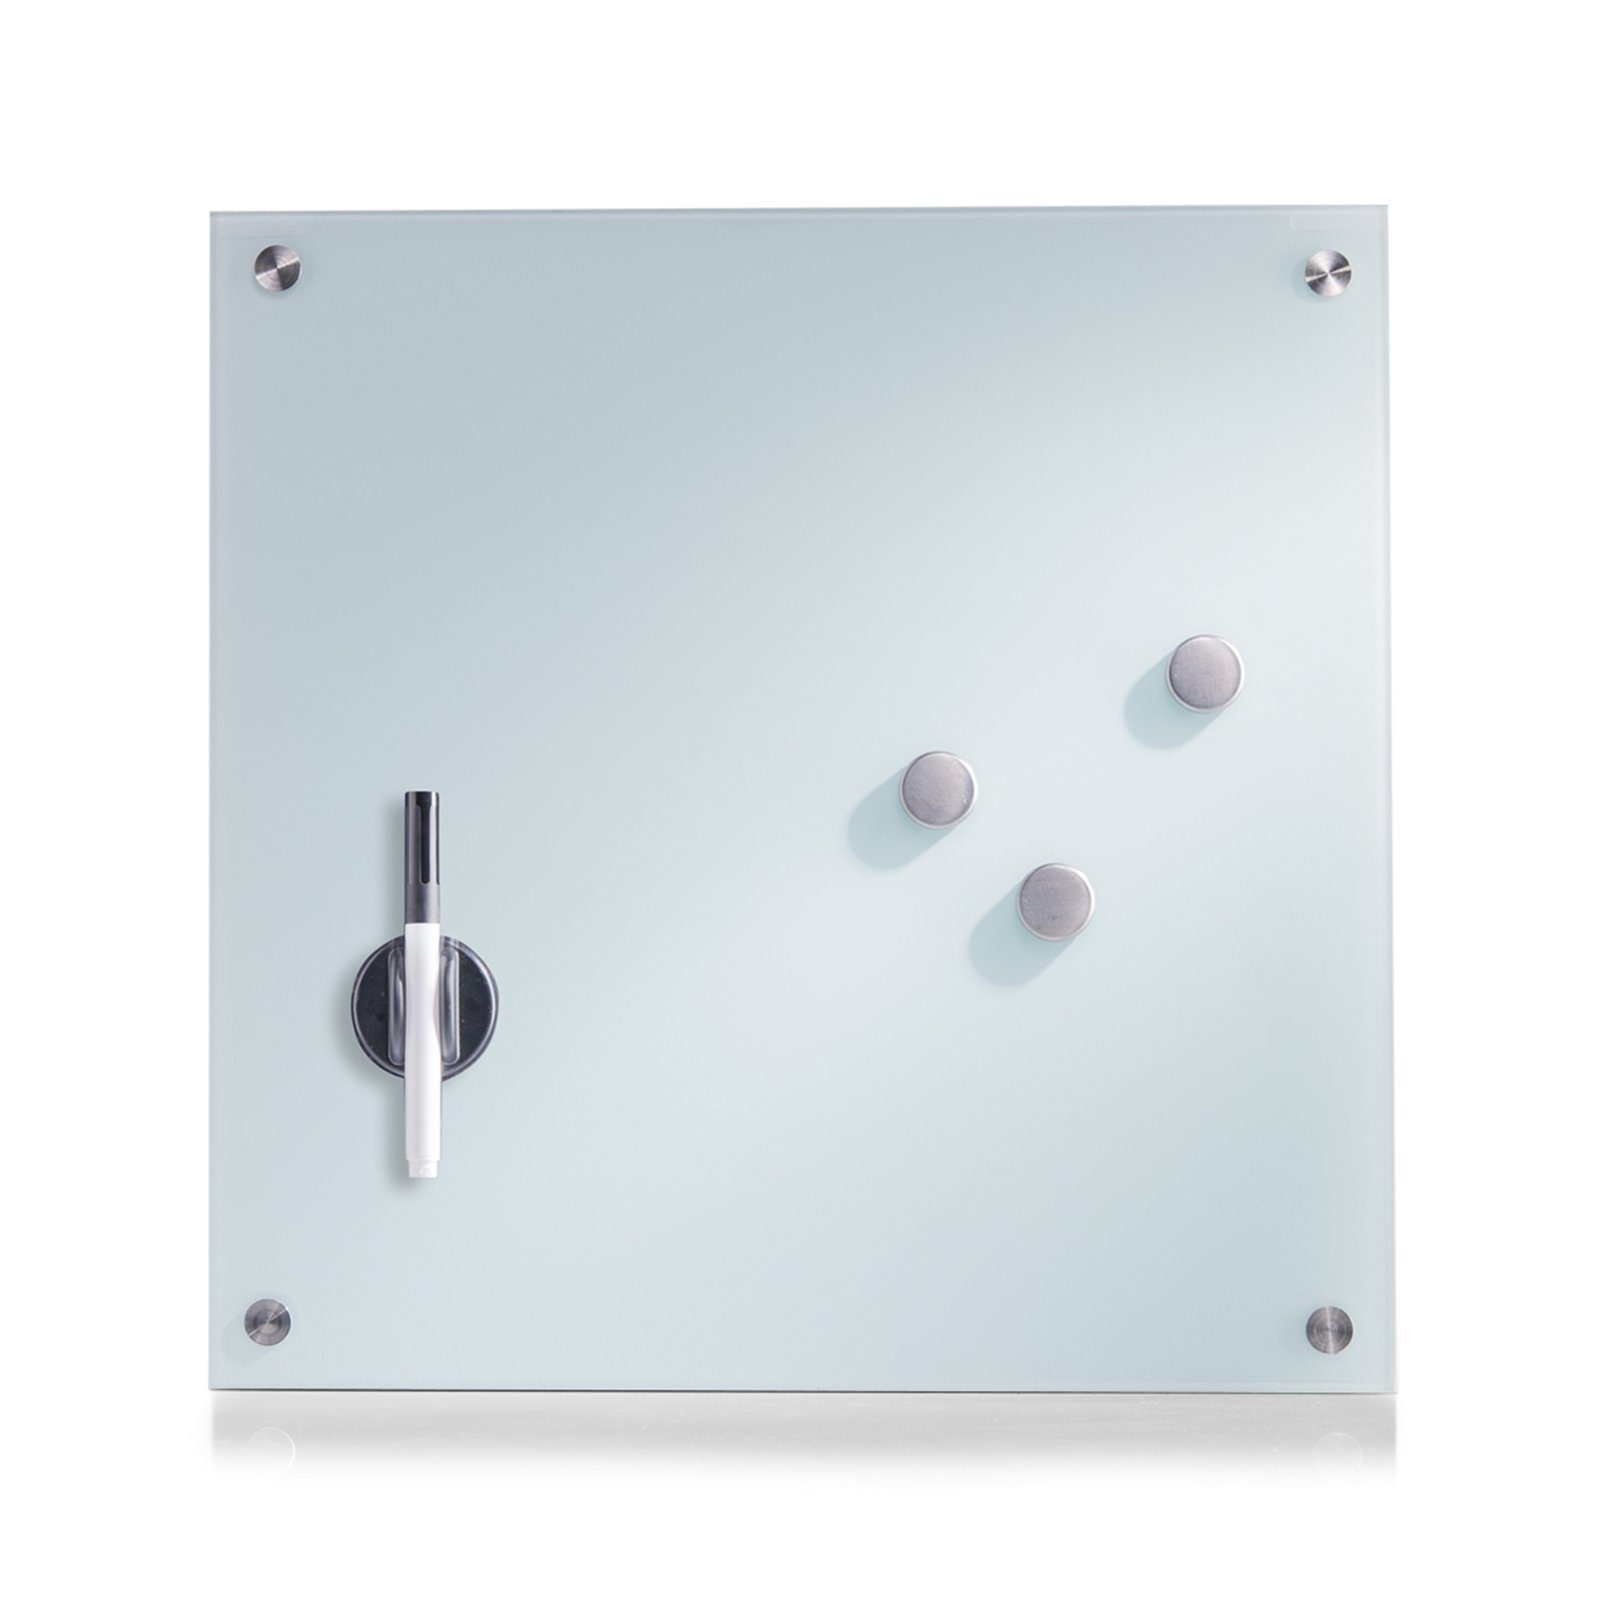 HTI-Living Memoboard Memoboard Glas quadratisch, Pinnwand Magnettafel Magnetboard Schreibtafel Schreibboard Weiss